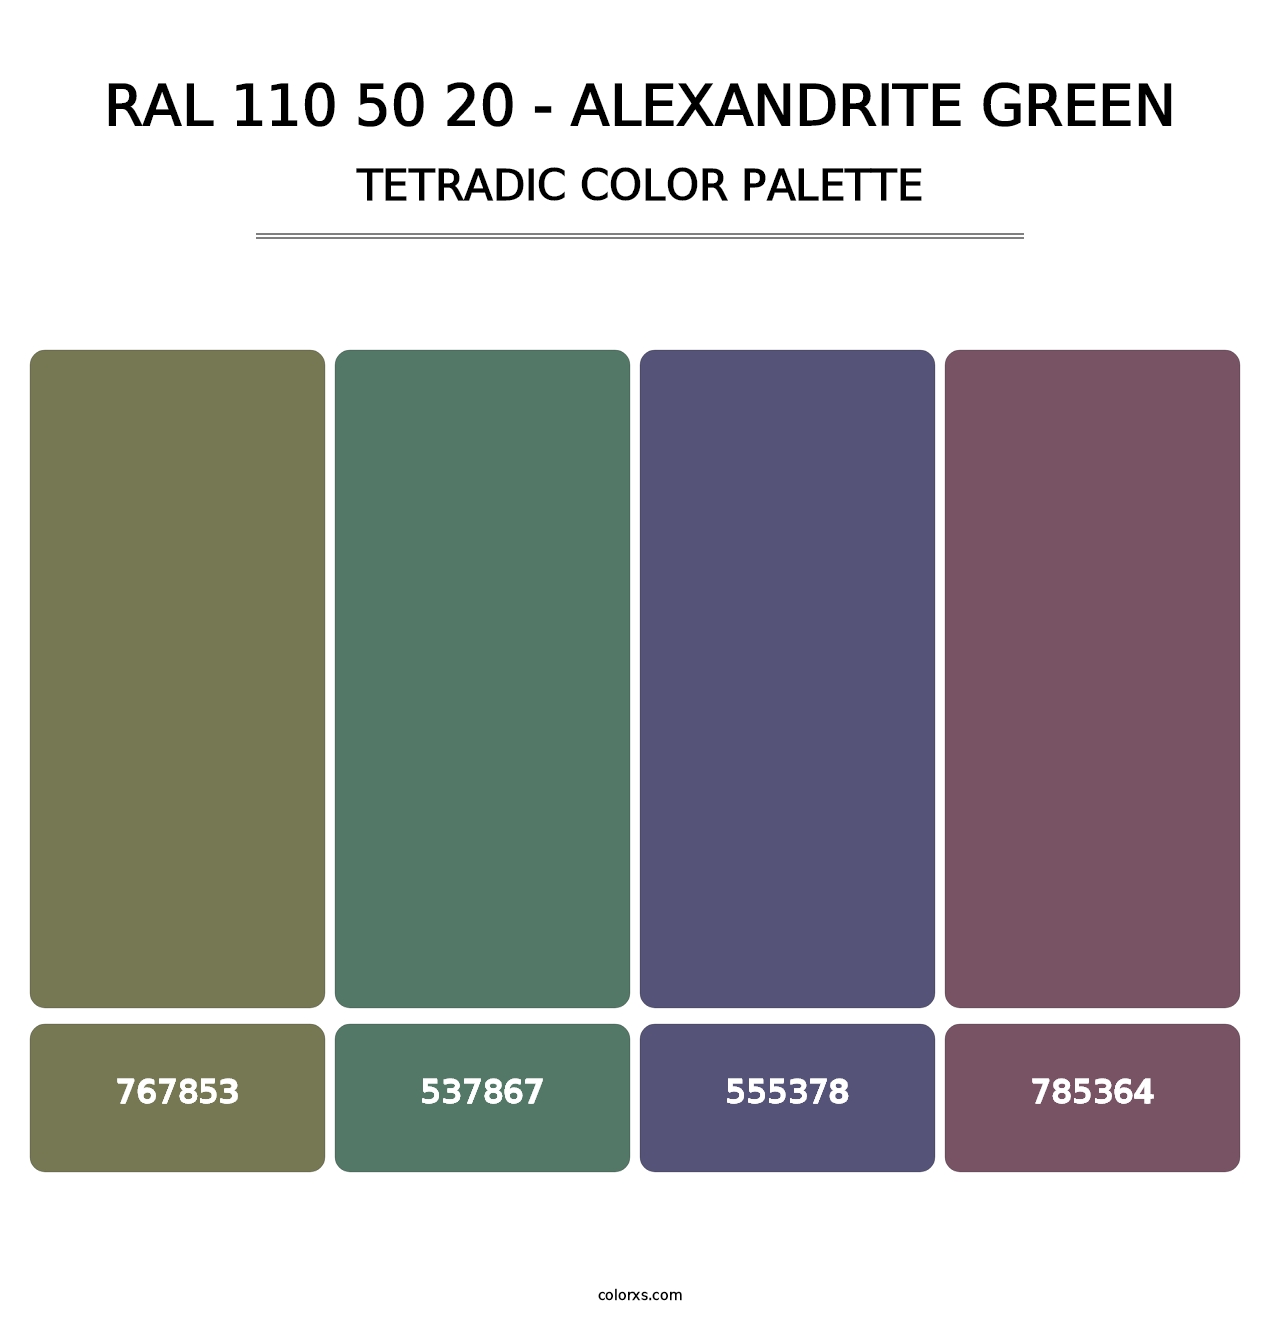 RAL 110 50 20 - Alexandrite Green - Tetradic Color Palette